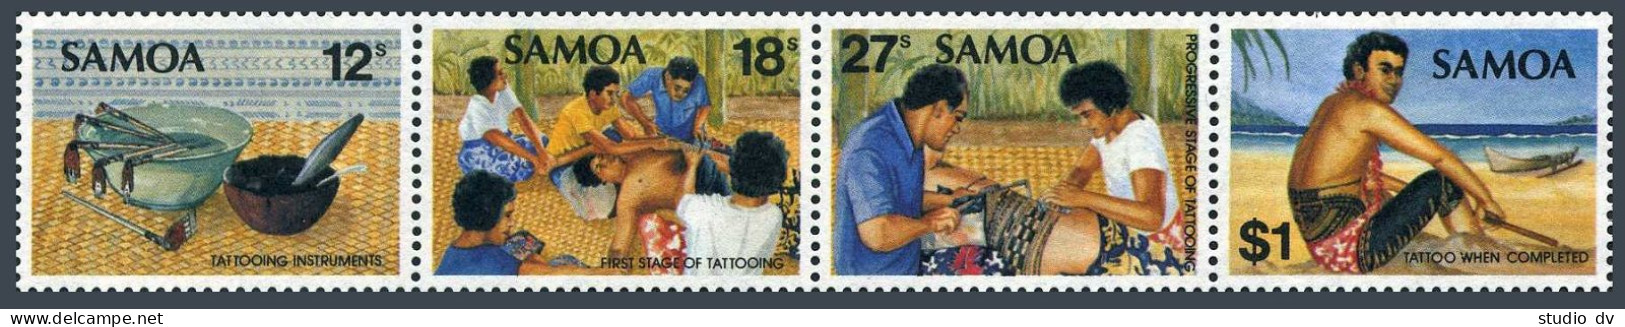 Samoa 561a Strip, MNH. Michel 464-467. Tattooing Instruments, 1981.  - Samoa (Staat)